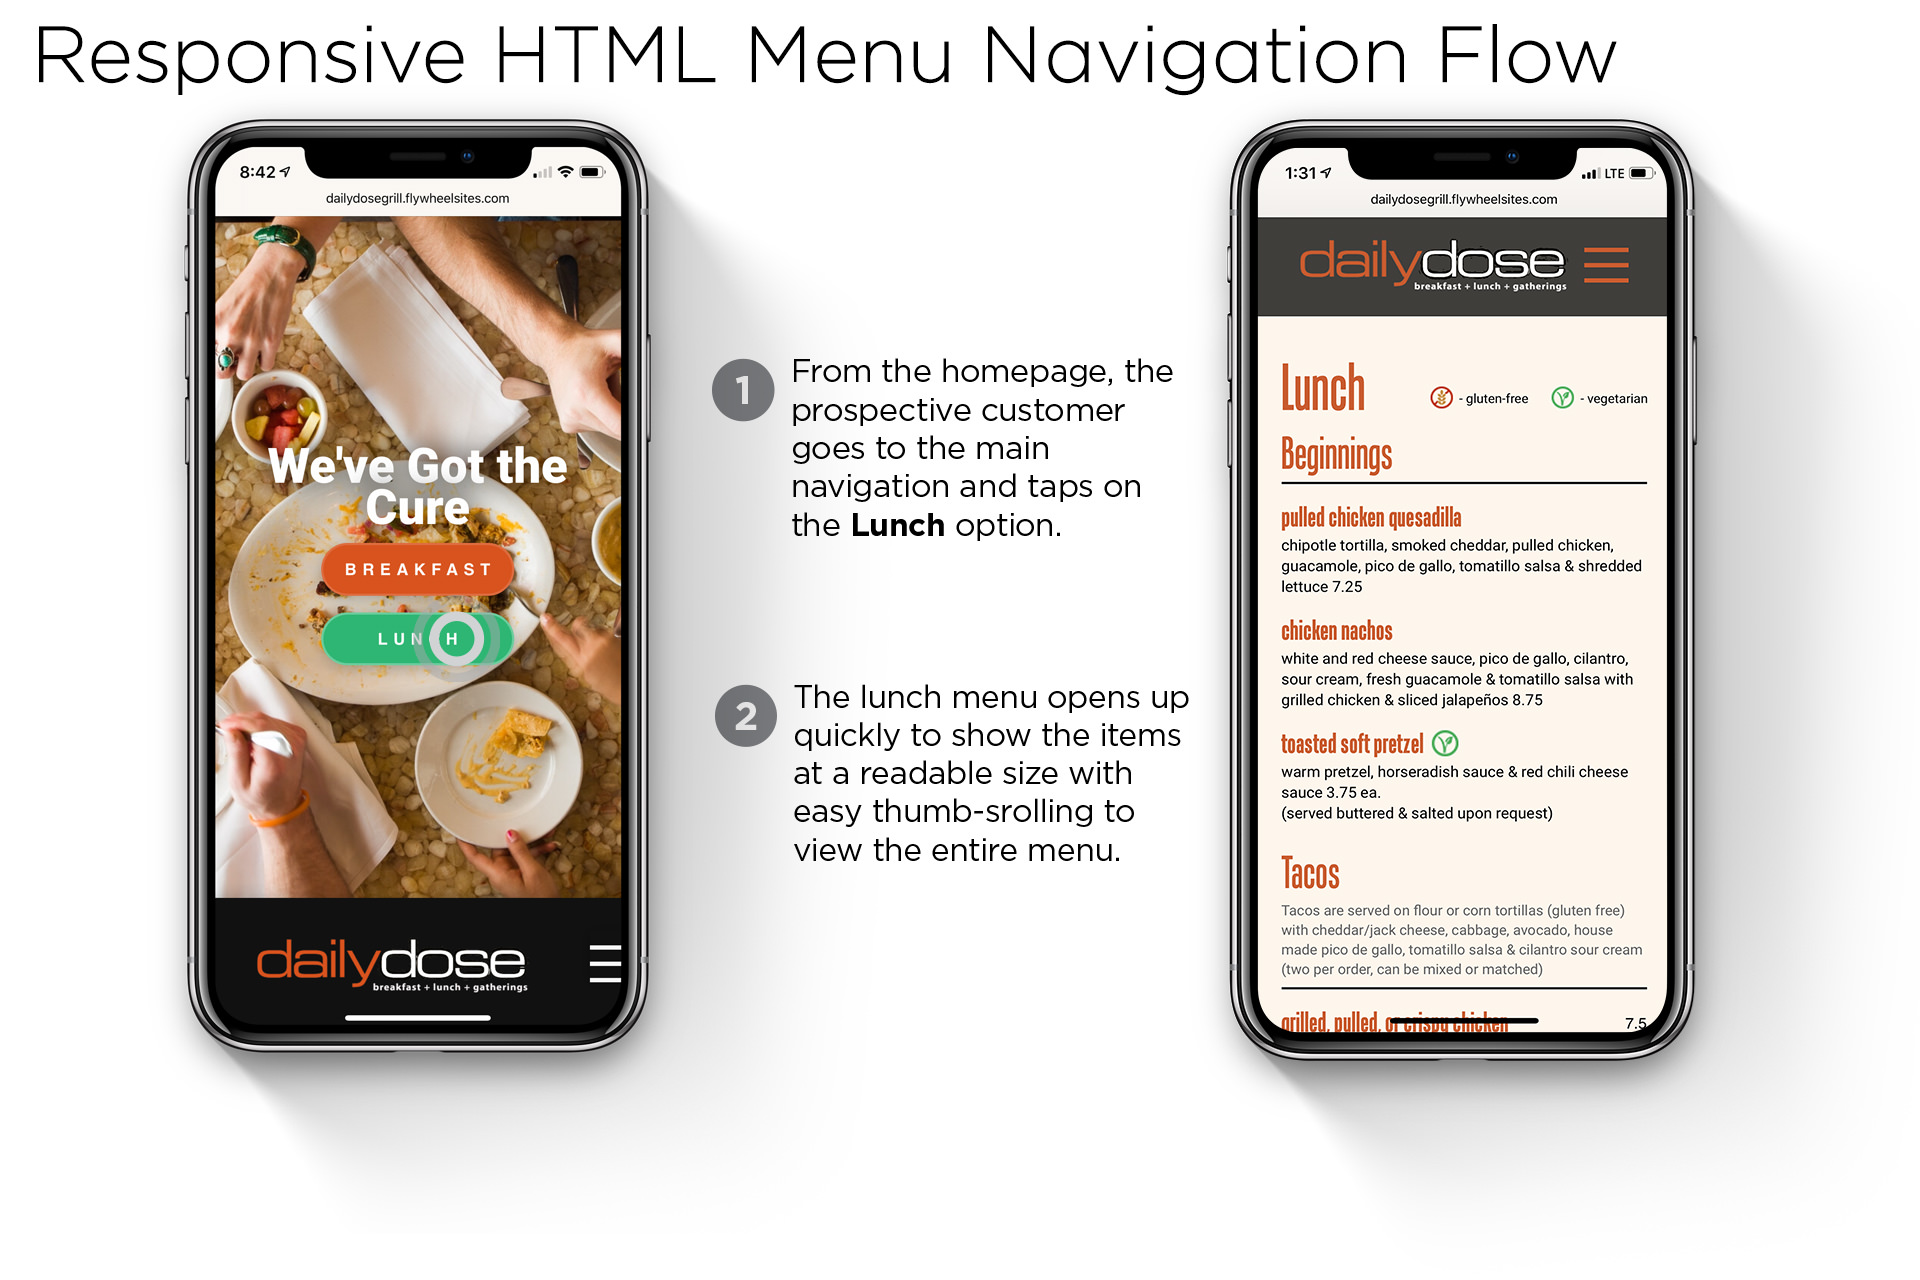 Responsive HTML Menus navigation flow for your restaurant